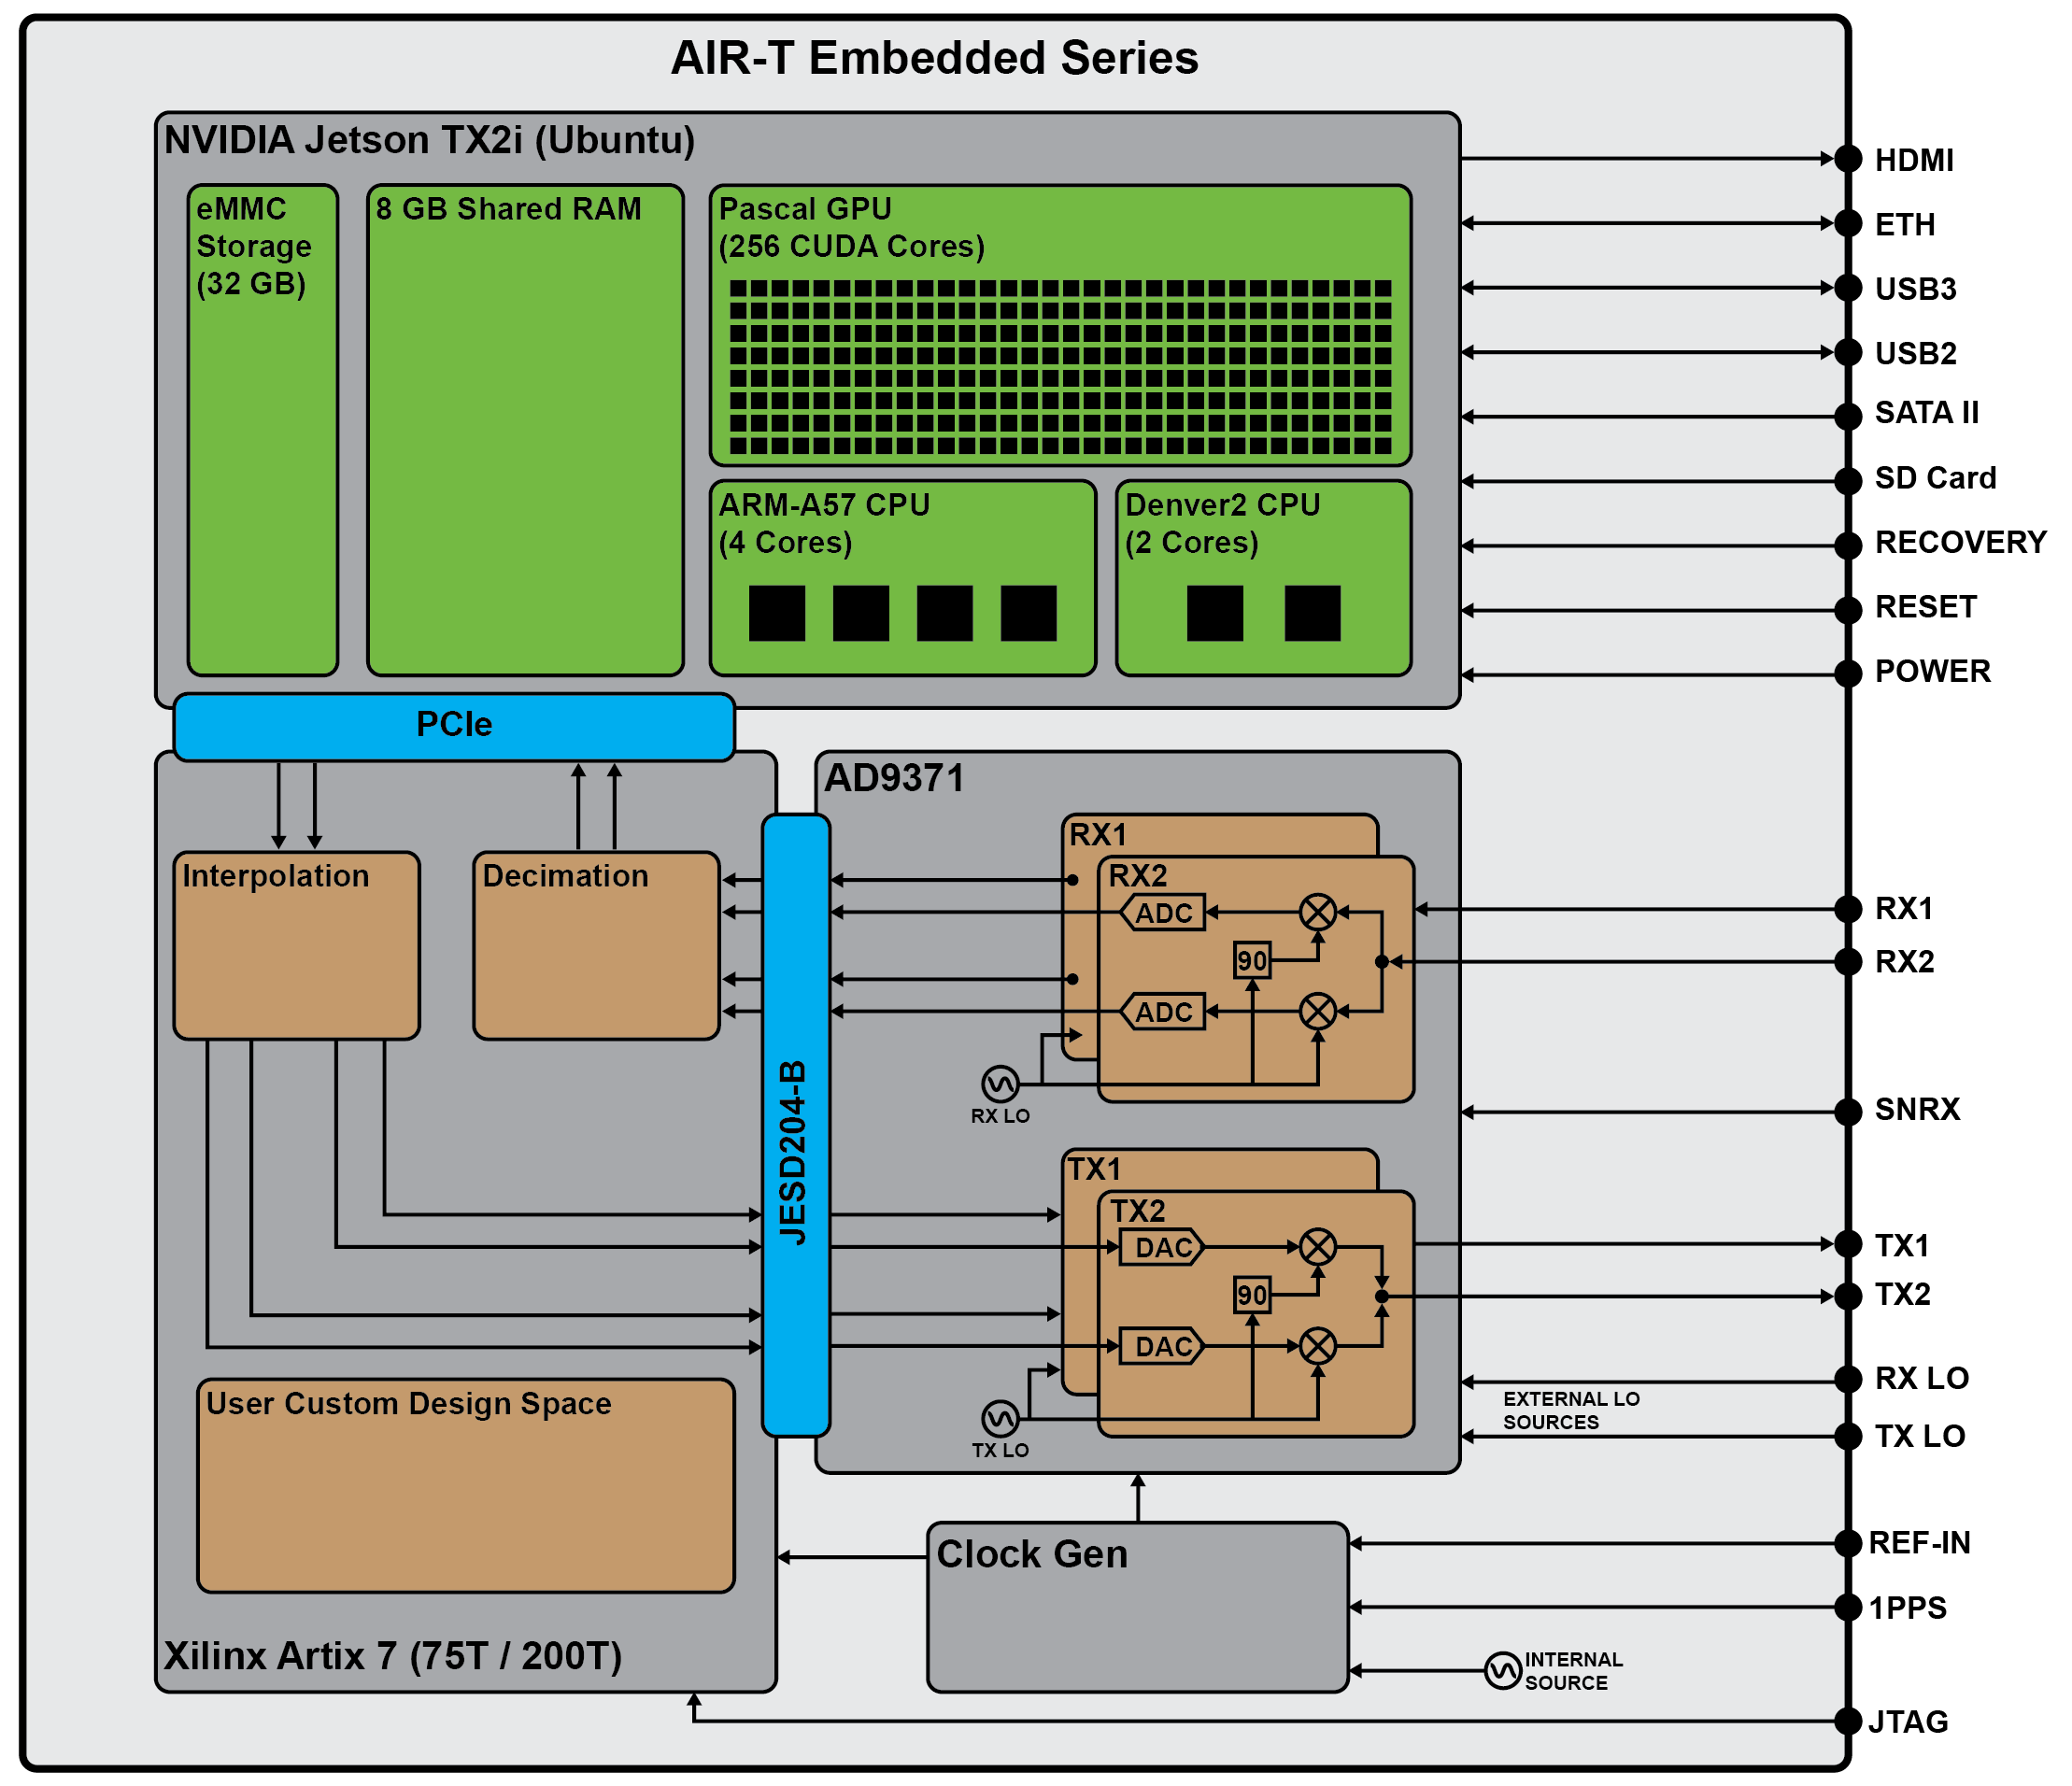 AIR-T Embedded Series Schematic